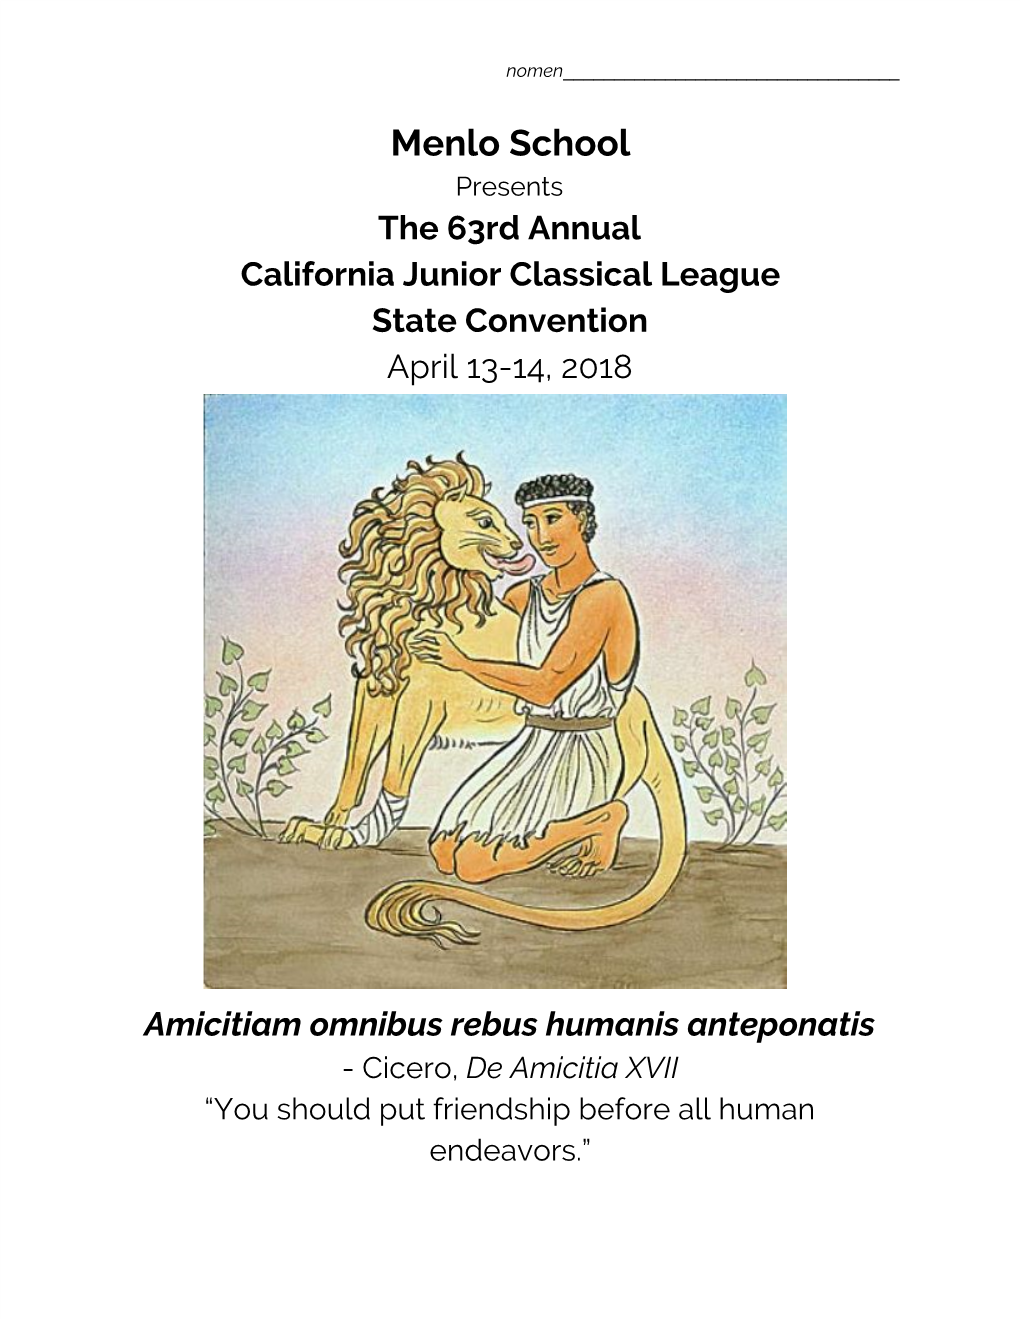 Menlo School Presents the 63Rd Annual California Junior Classical League State Convention April 13-14, 2018